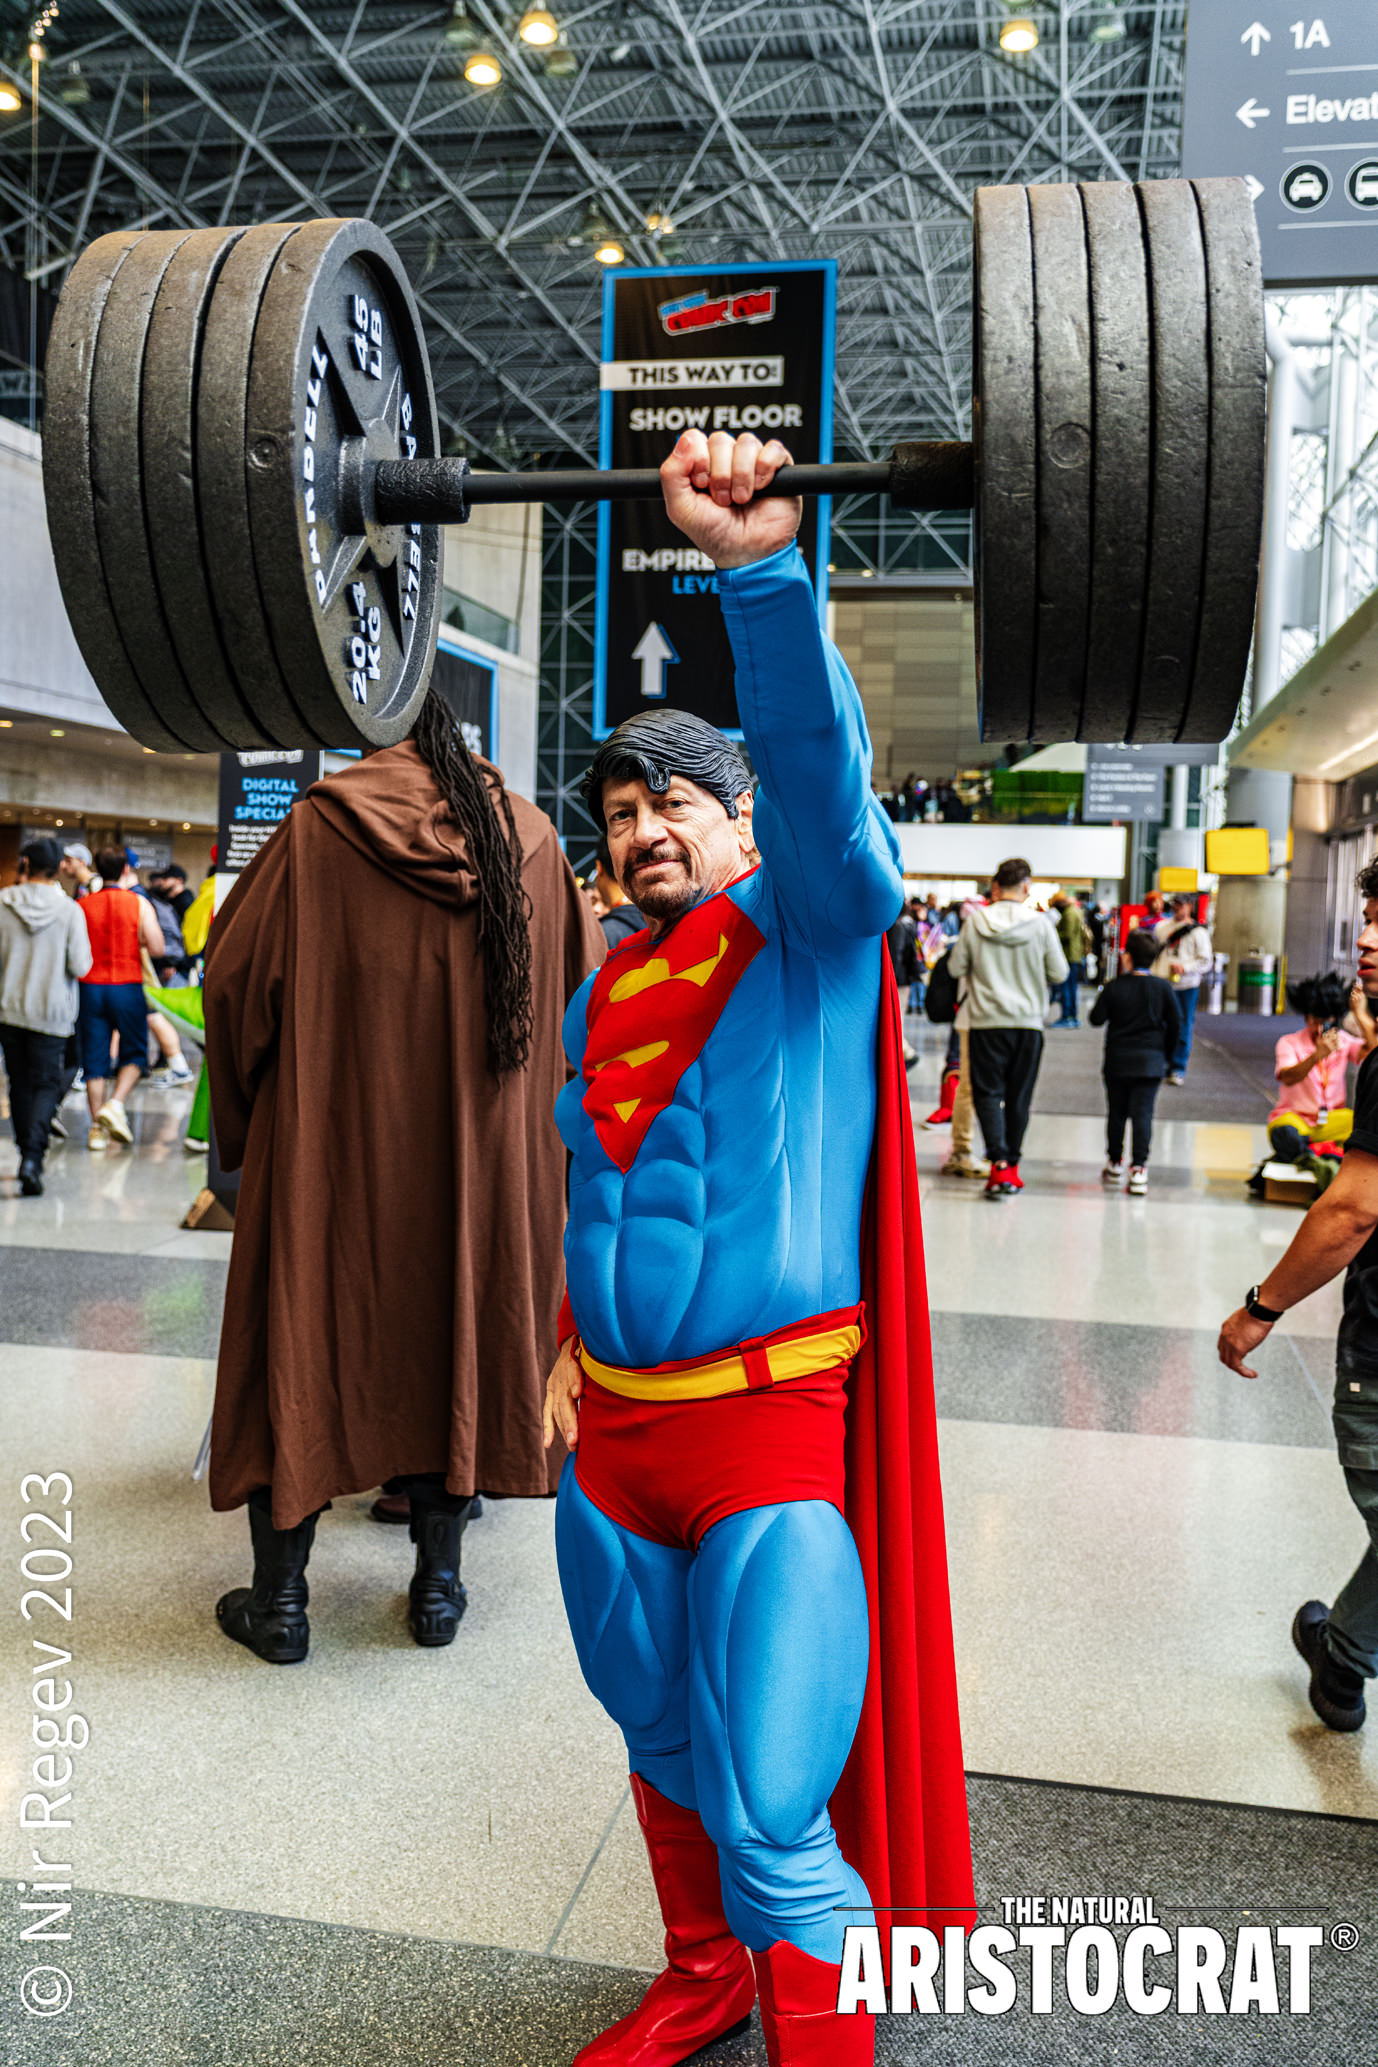 NYCC Superman cosplayer at New York Comic Con 2023. Photo Credit: © Nir Regev 2023 - The Natural Aristocrat®